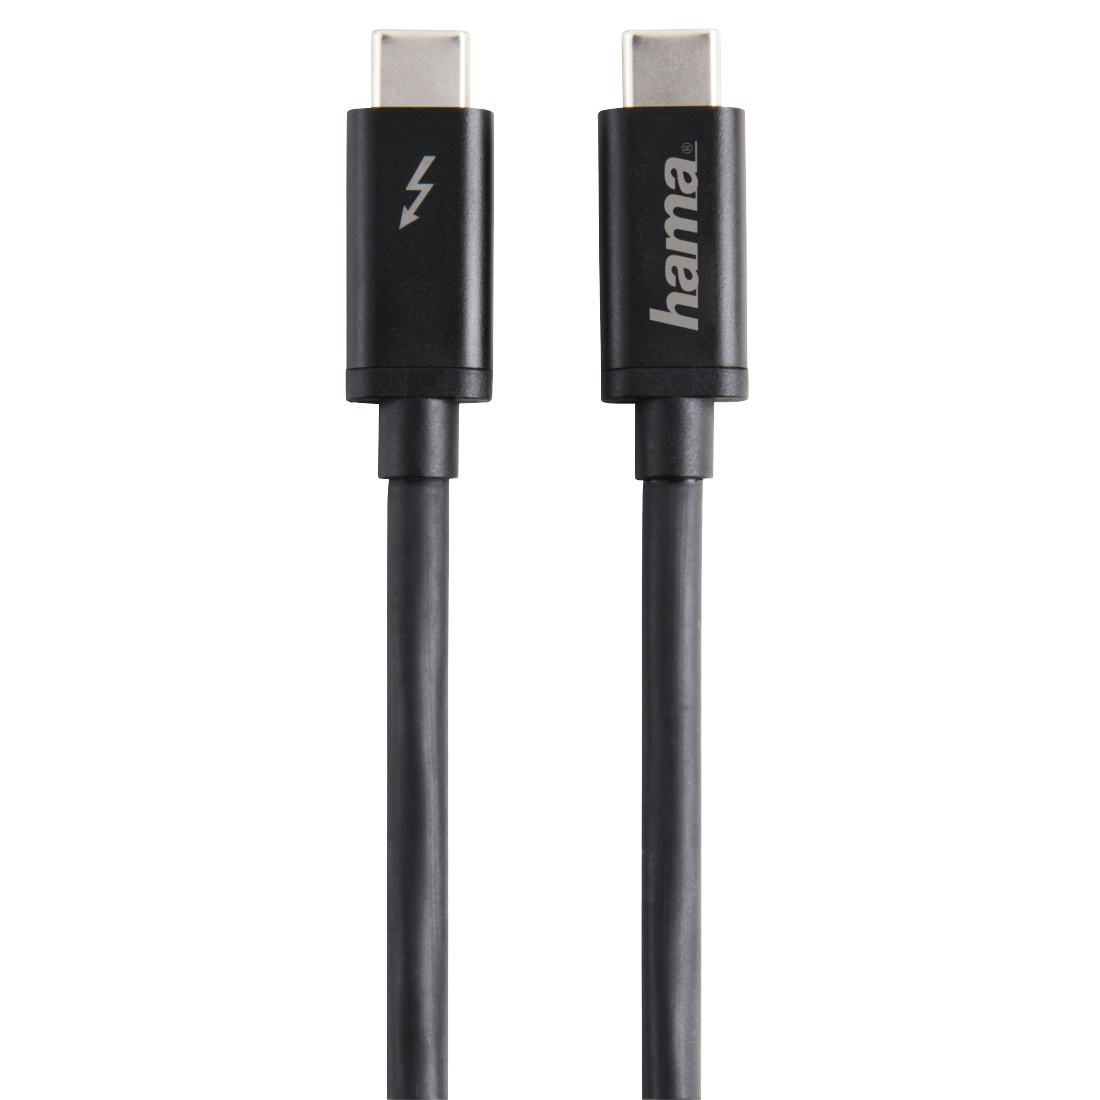 Hama Thunderbolt 3 Cable "USB-C" 1m